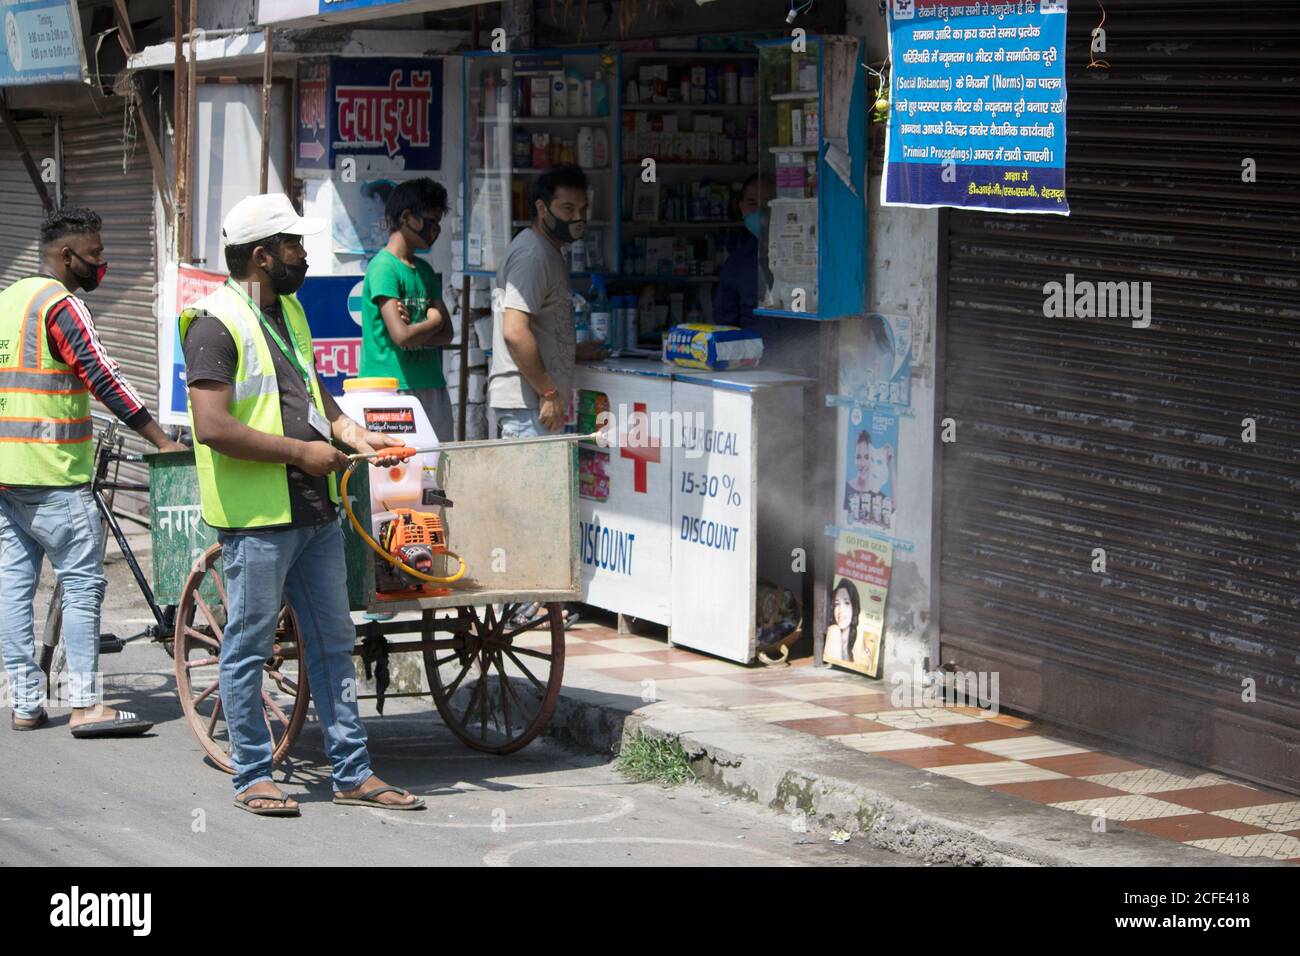 Municipal worker sanitizes a shop, wearing face mask. Stock Photo